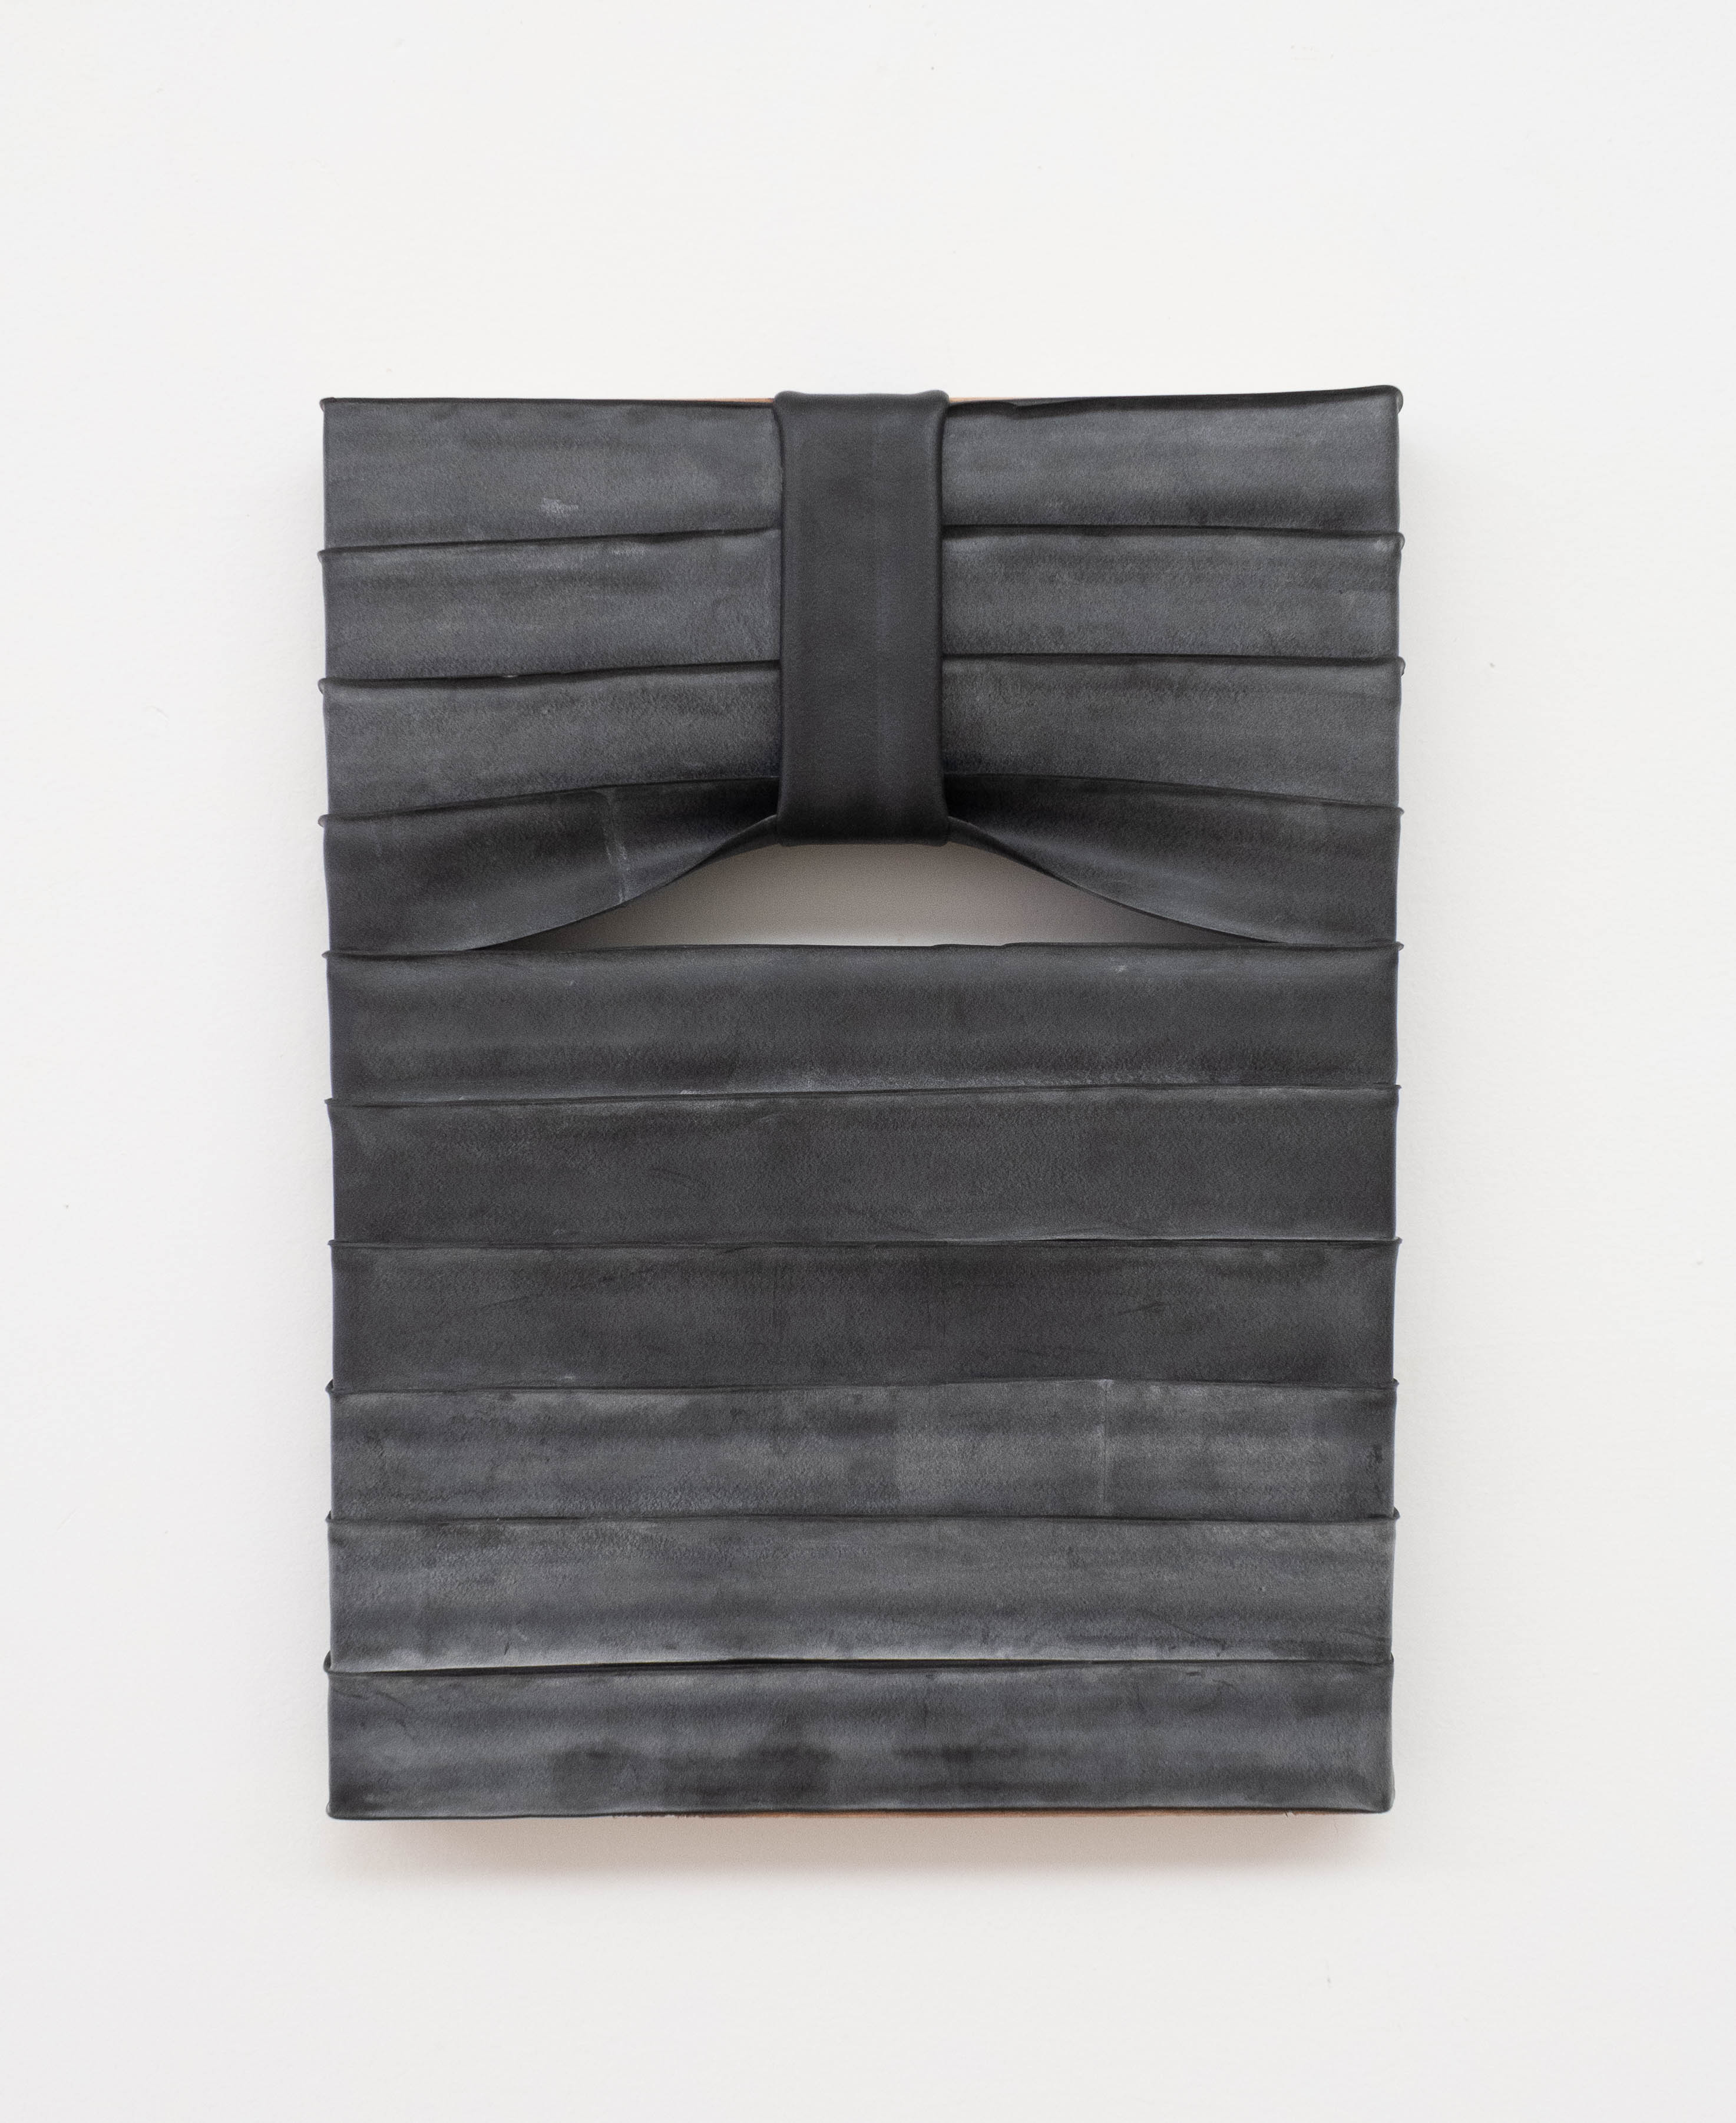 Fernando Soares, Mimetismo 25, Borracha sobre chassi de madeira, 40 x 30 cm, 2019